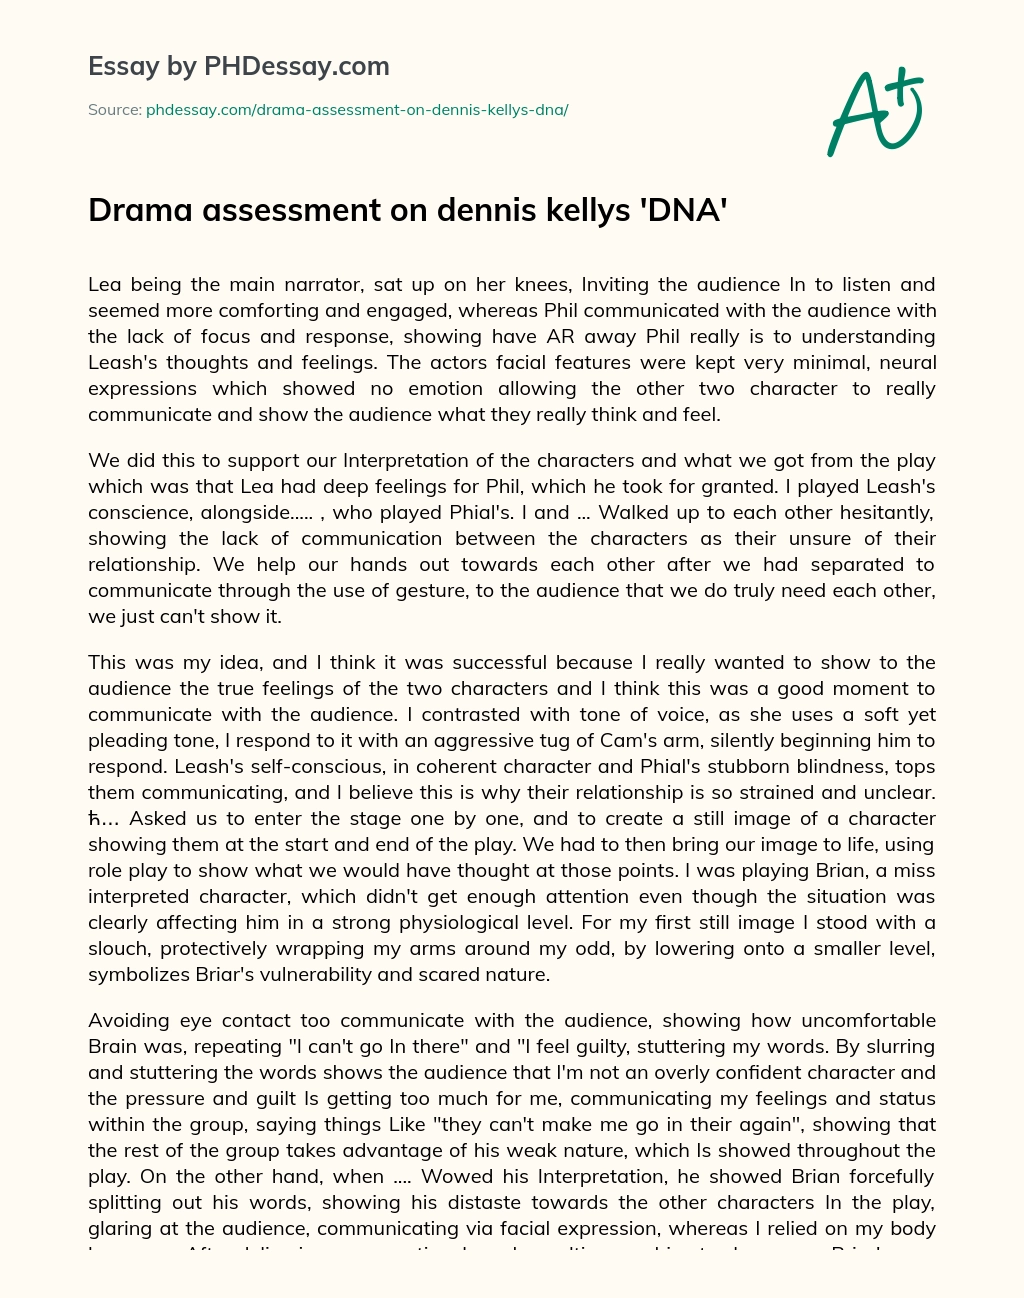 Drama assessment on dennis kellys ‘DNA’ essay